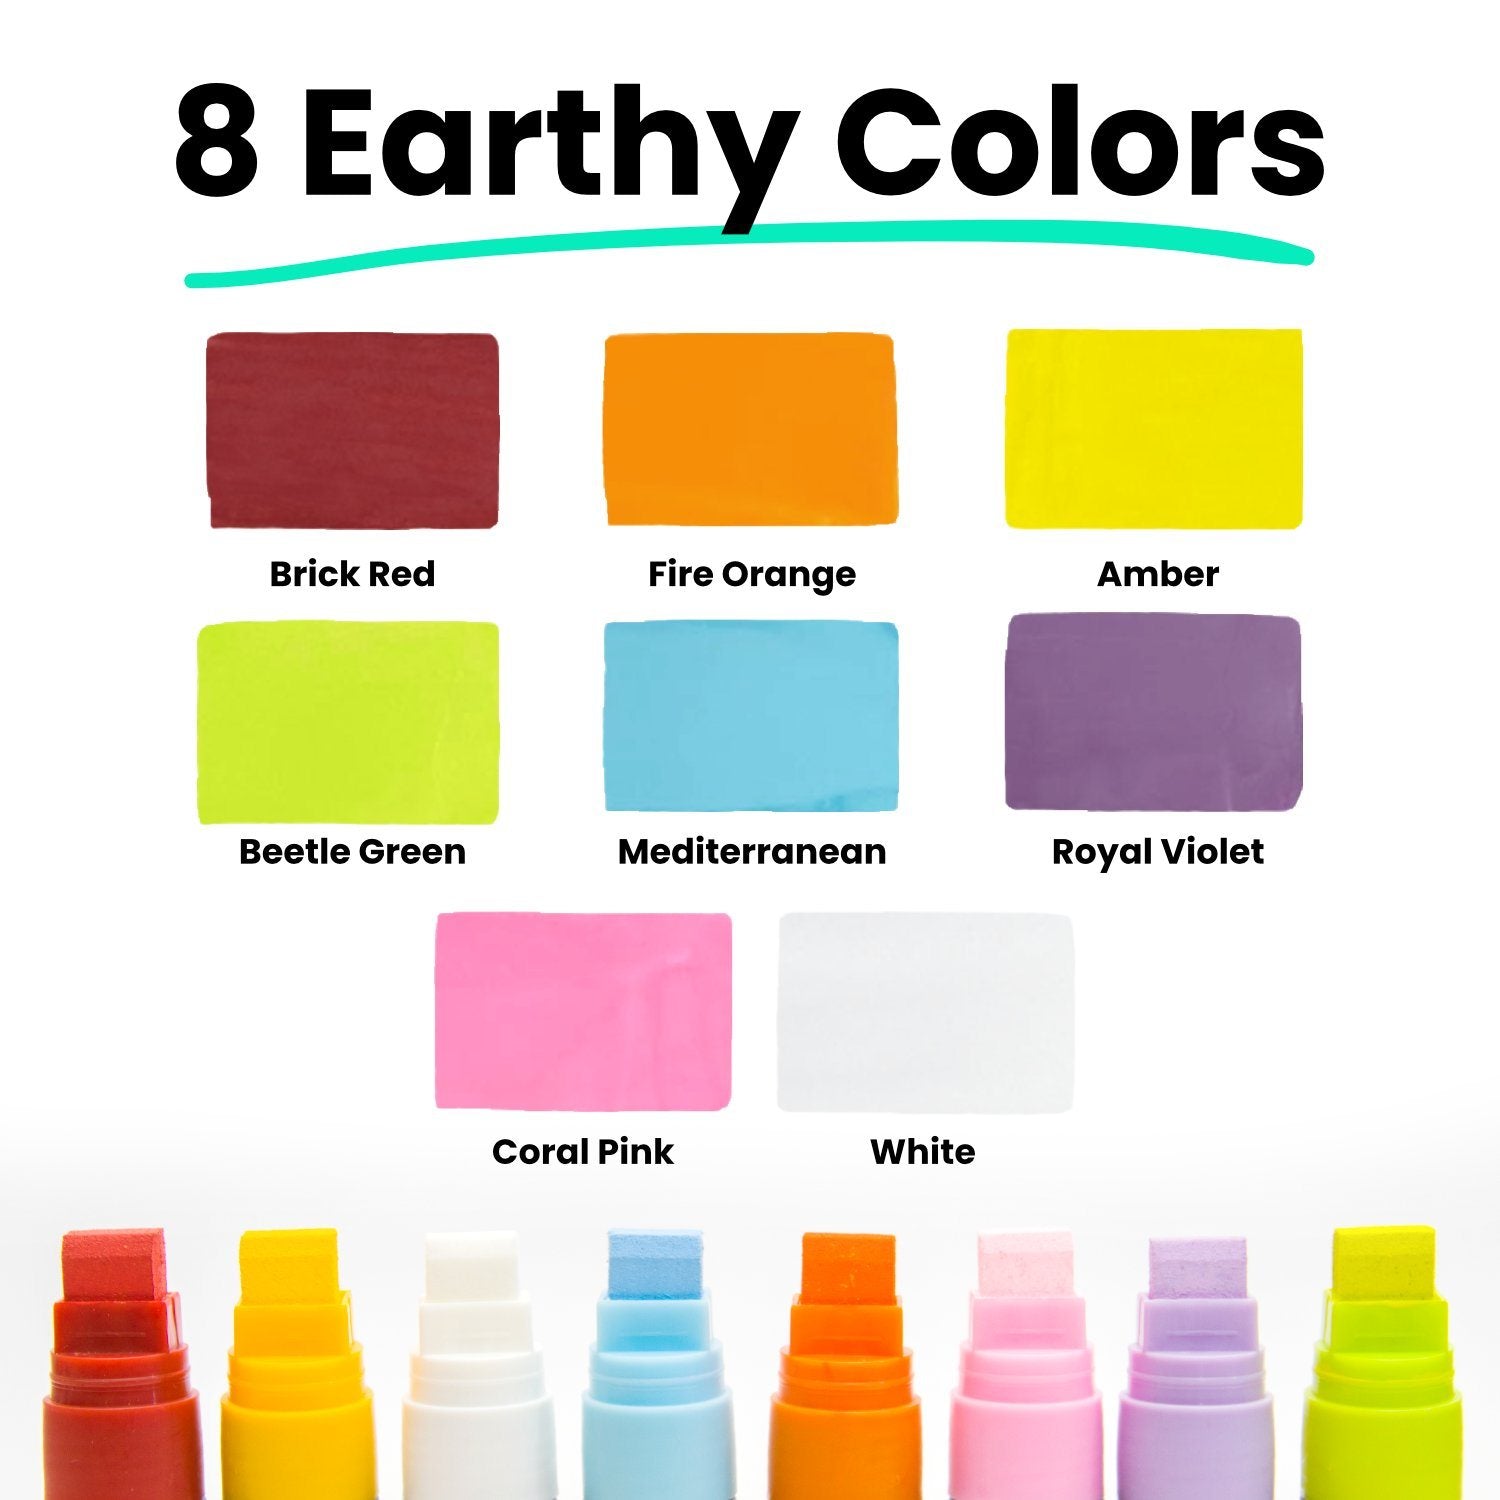 Bundle for Kids: 10 Neon + 8 Shimmer Washable Dot Markers - Chalkola Art  Supply